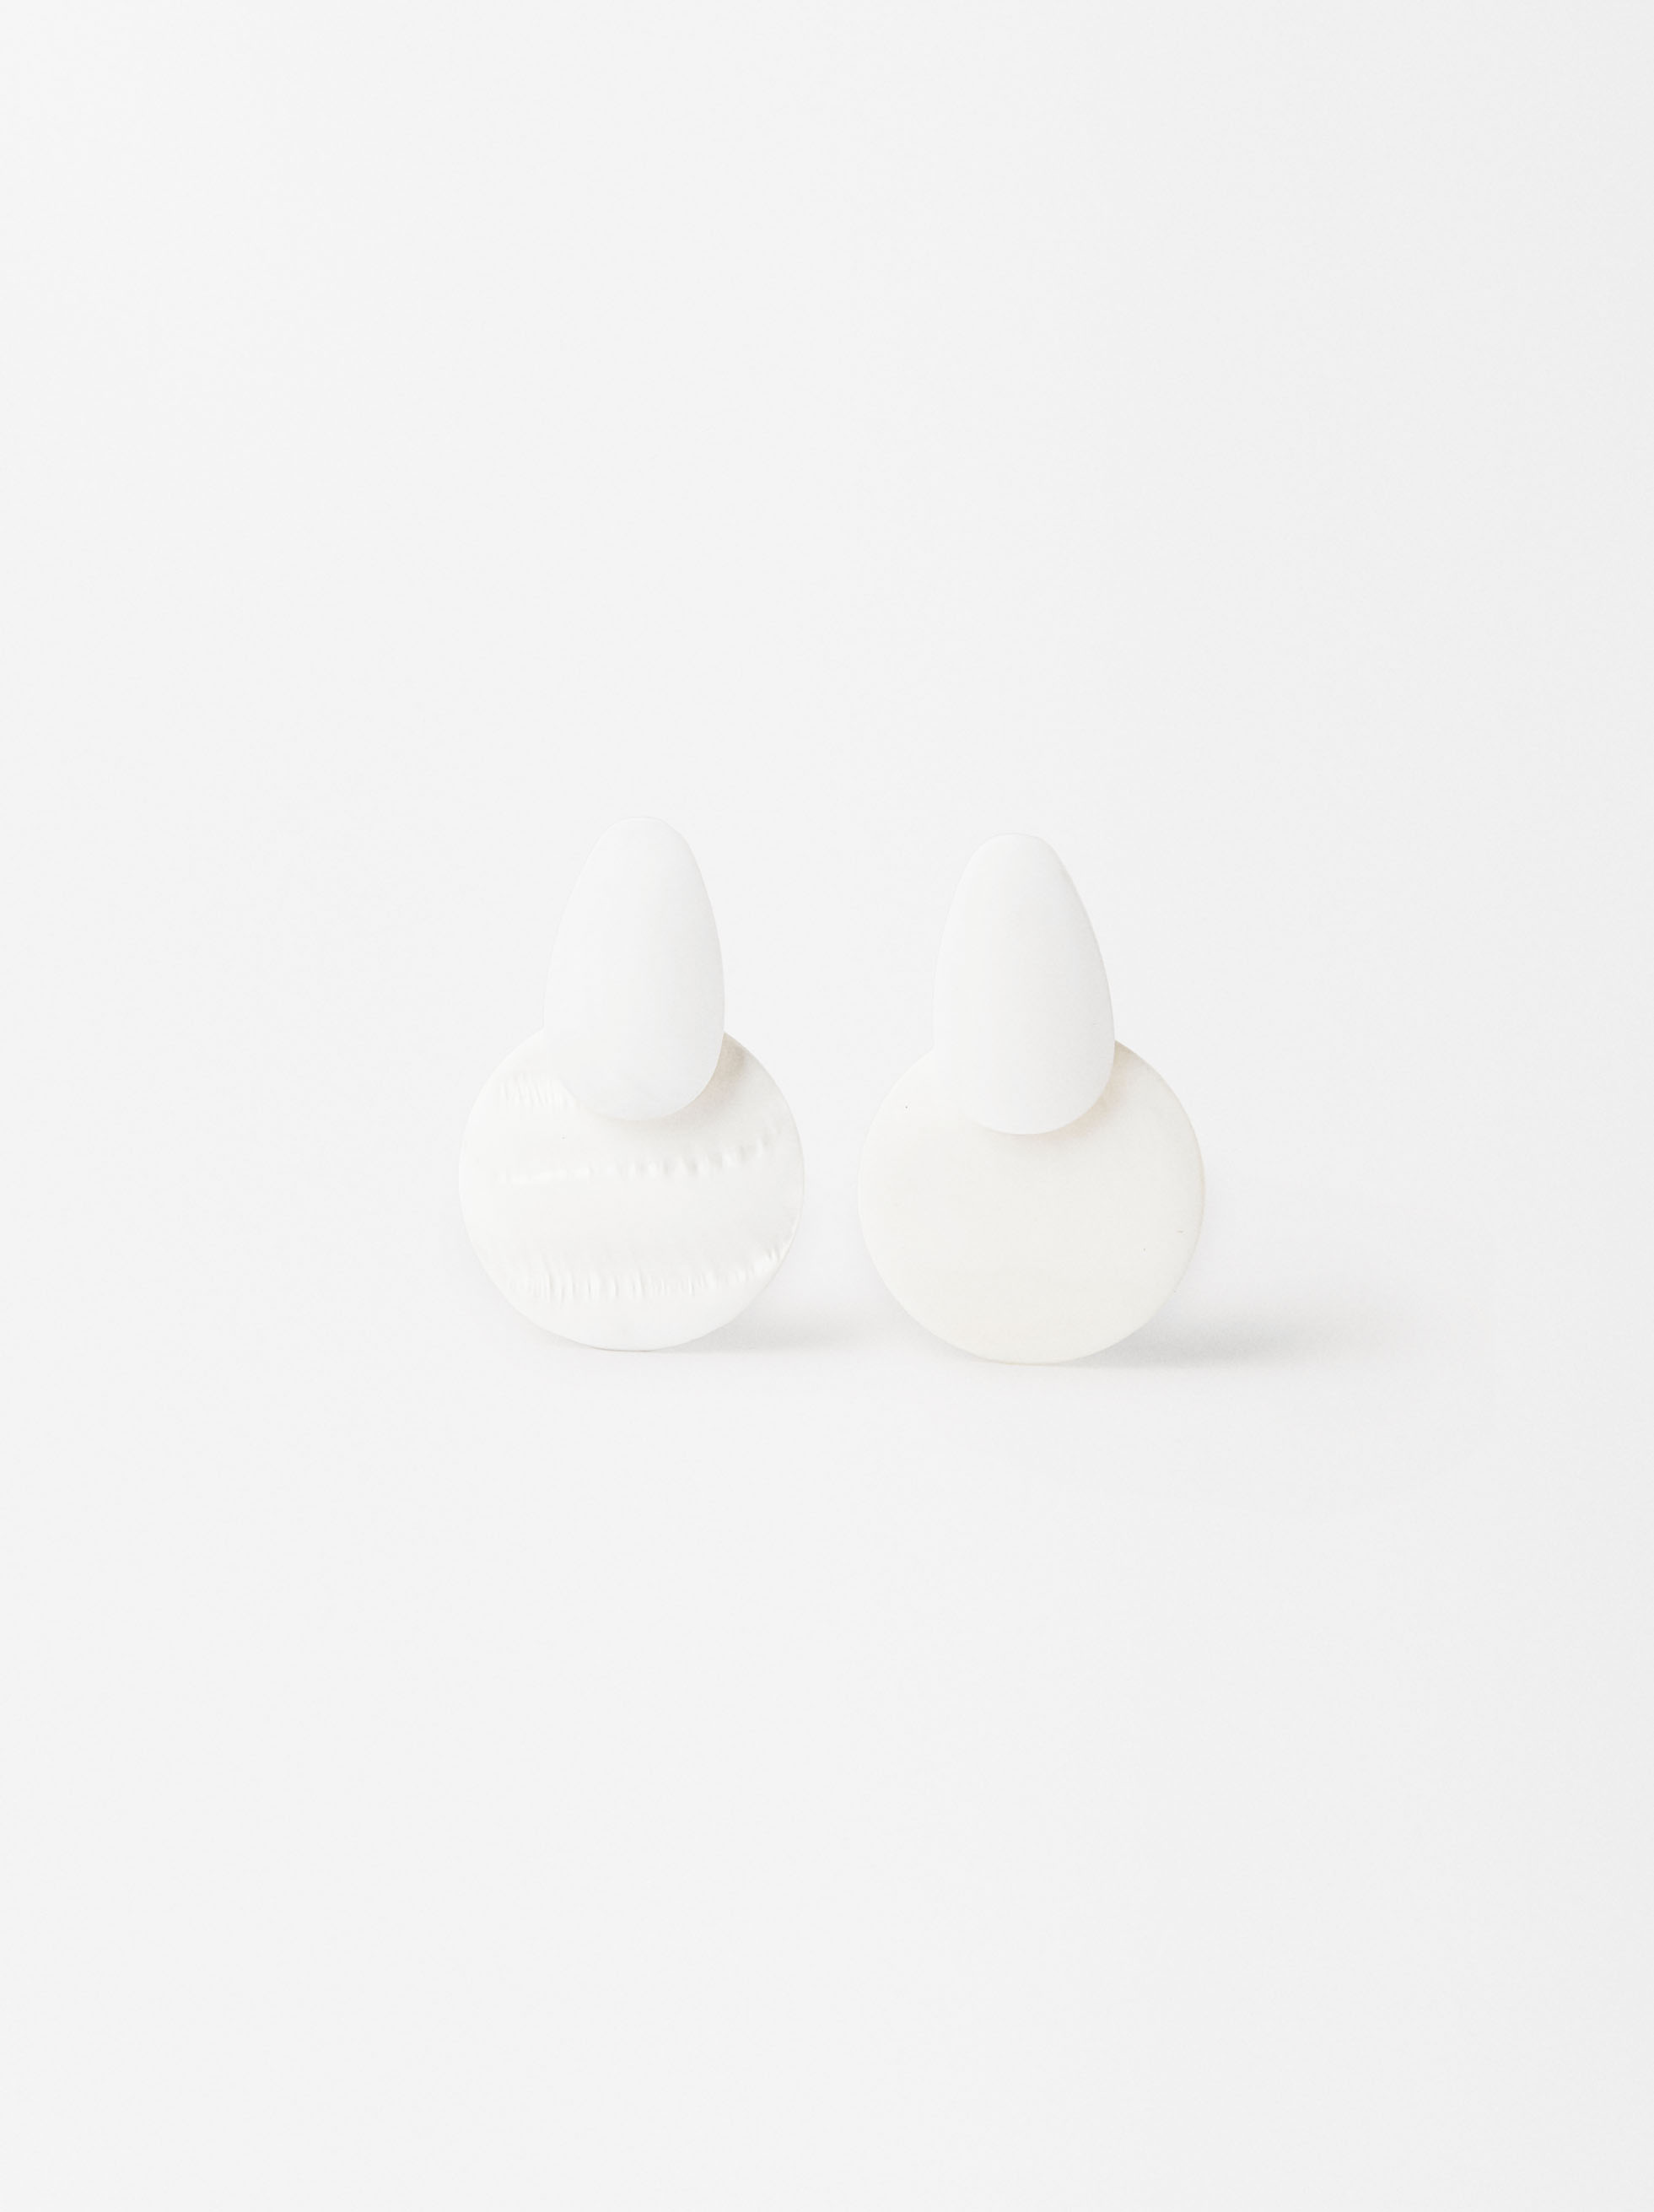 Medium Shell Earrings image number 1.0